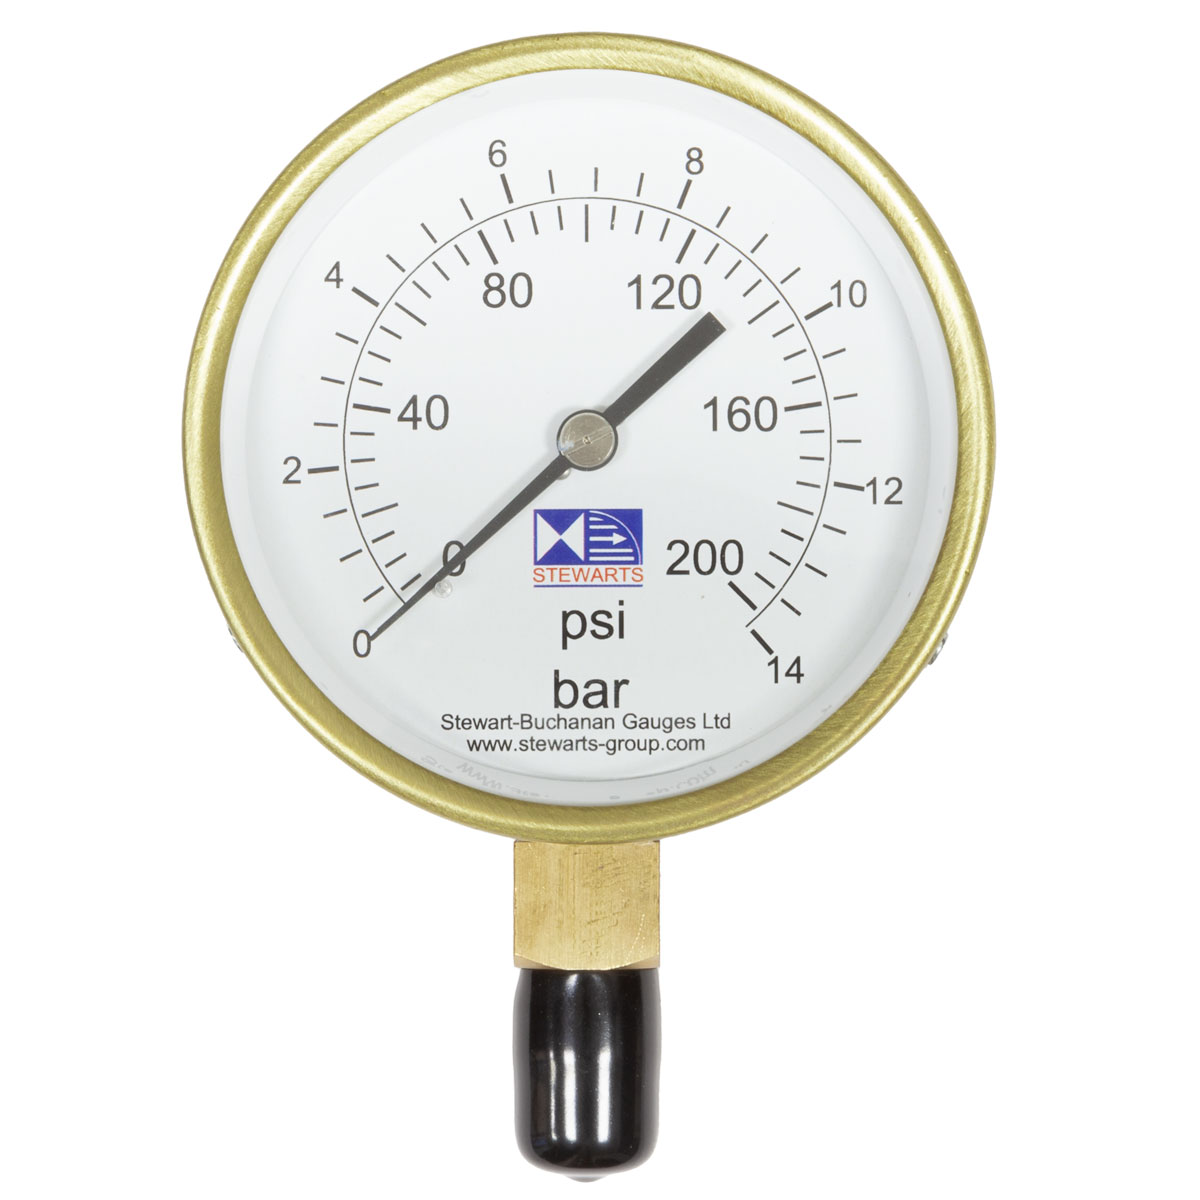 4"Dial Pressure Gauge 0-200psi/bar 3/8"BSP Bottom Connection